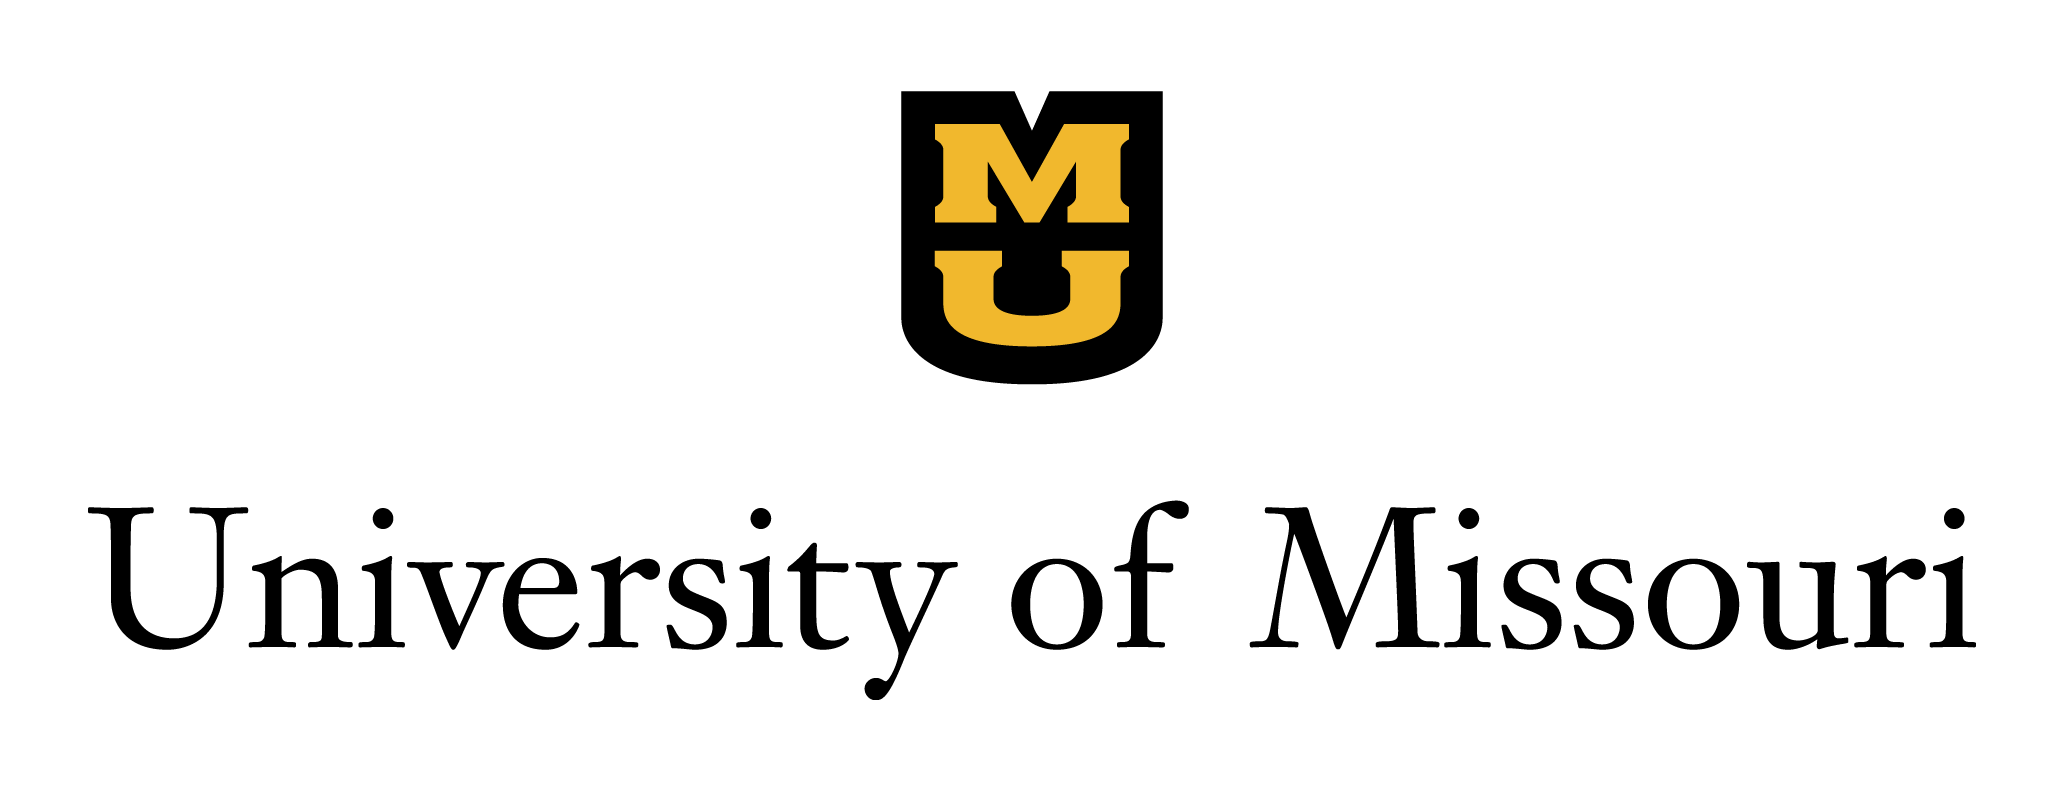 We Are Mizzou Logo - MU Licensing | University of Missouri Licensing and Trademarks